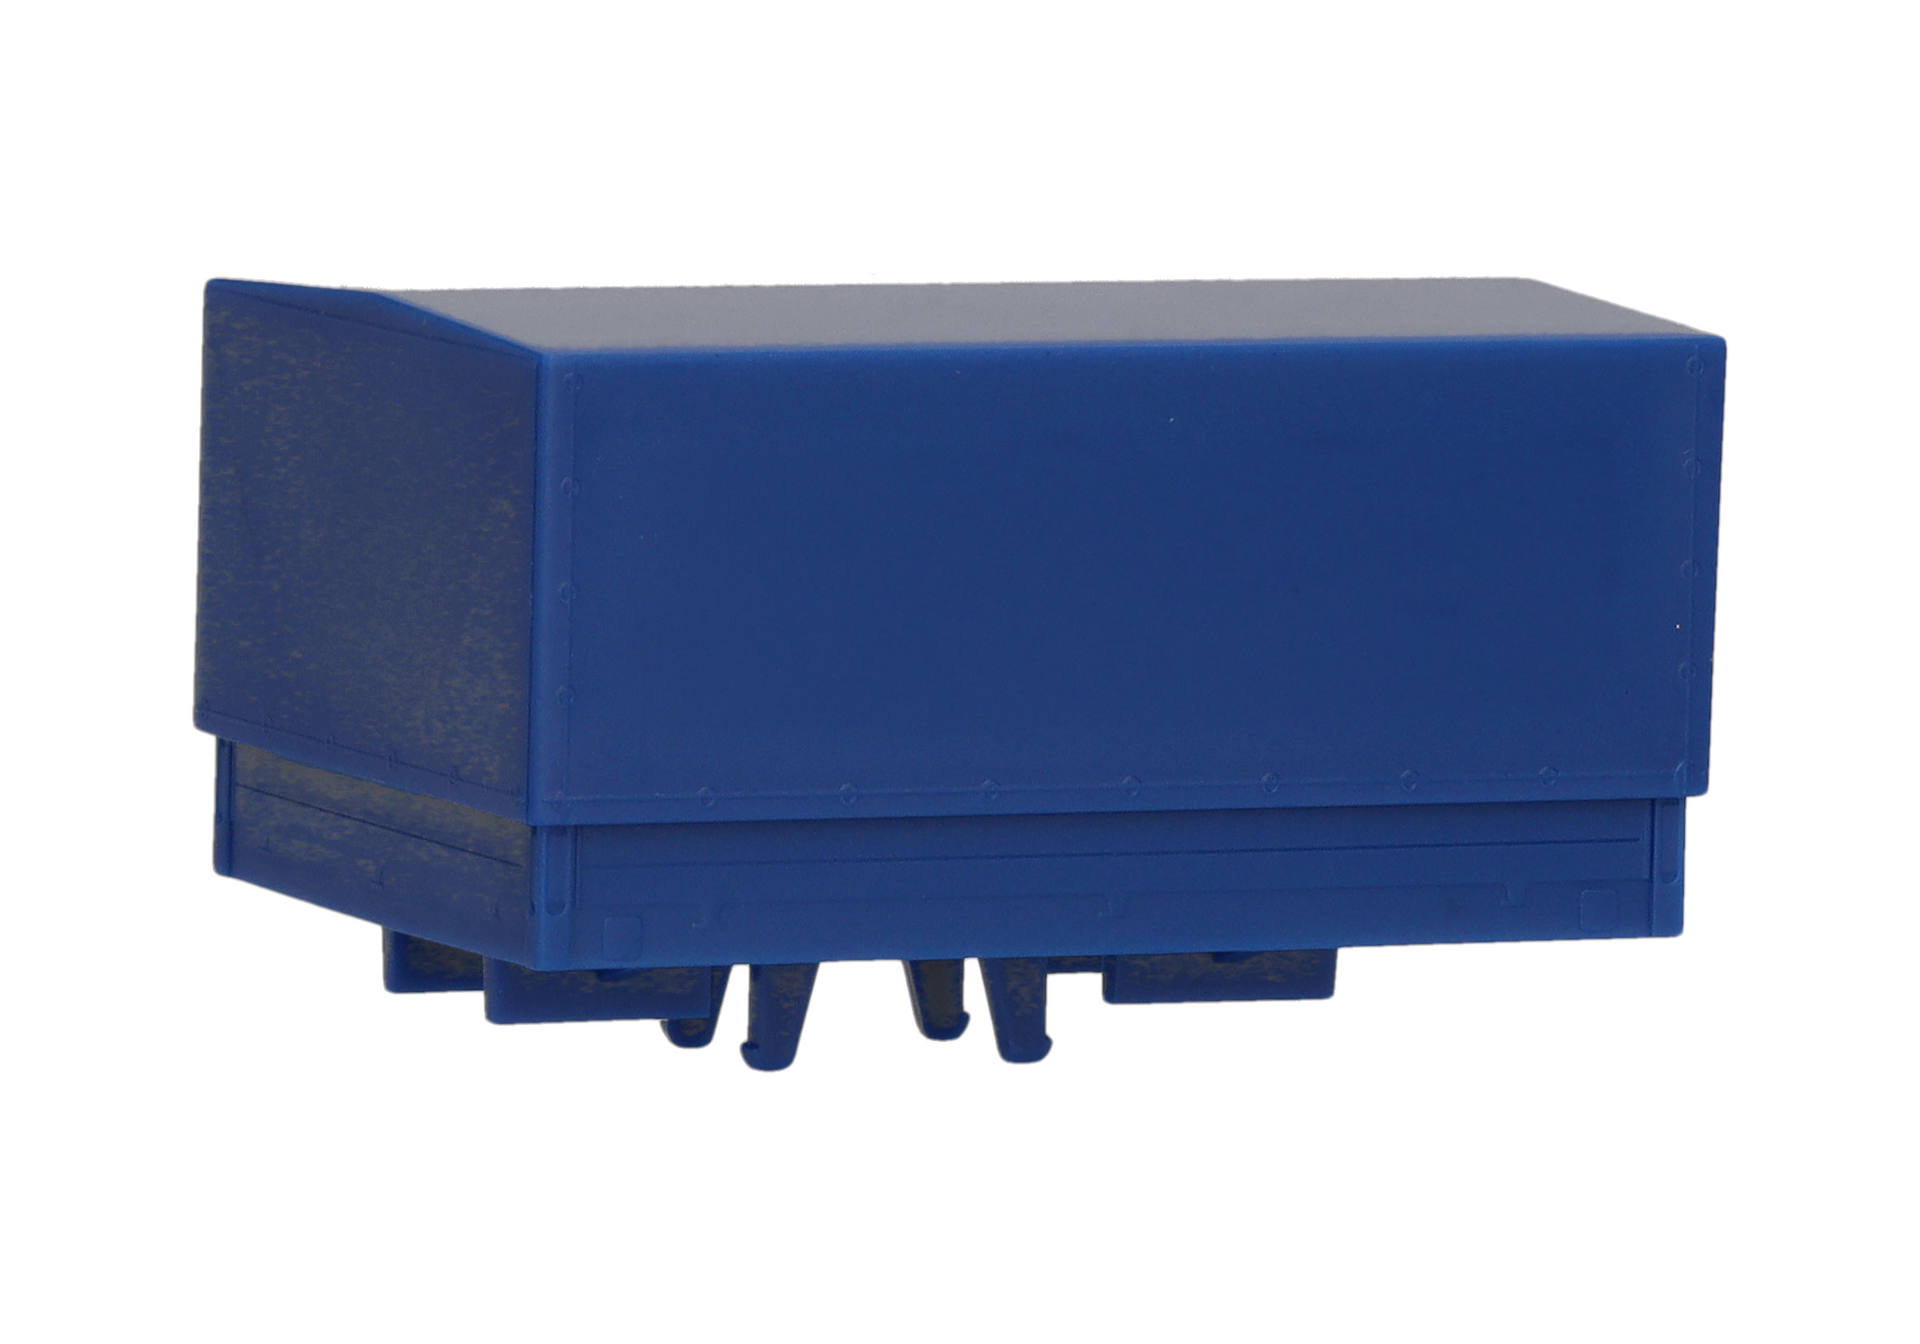 Accessories: ballast platform with tarpaulin (heavy duty), gentian blue, 2 pieces